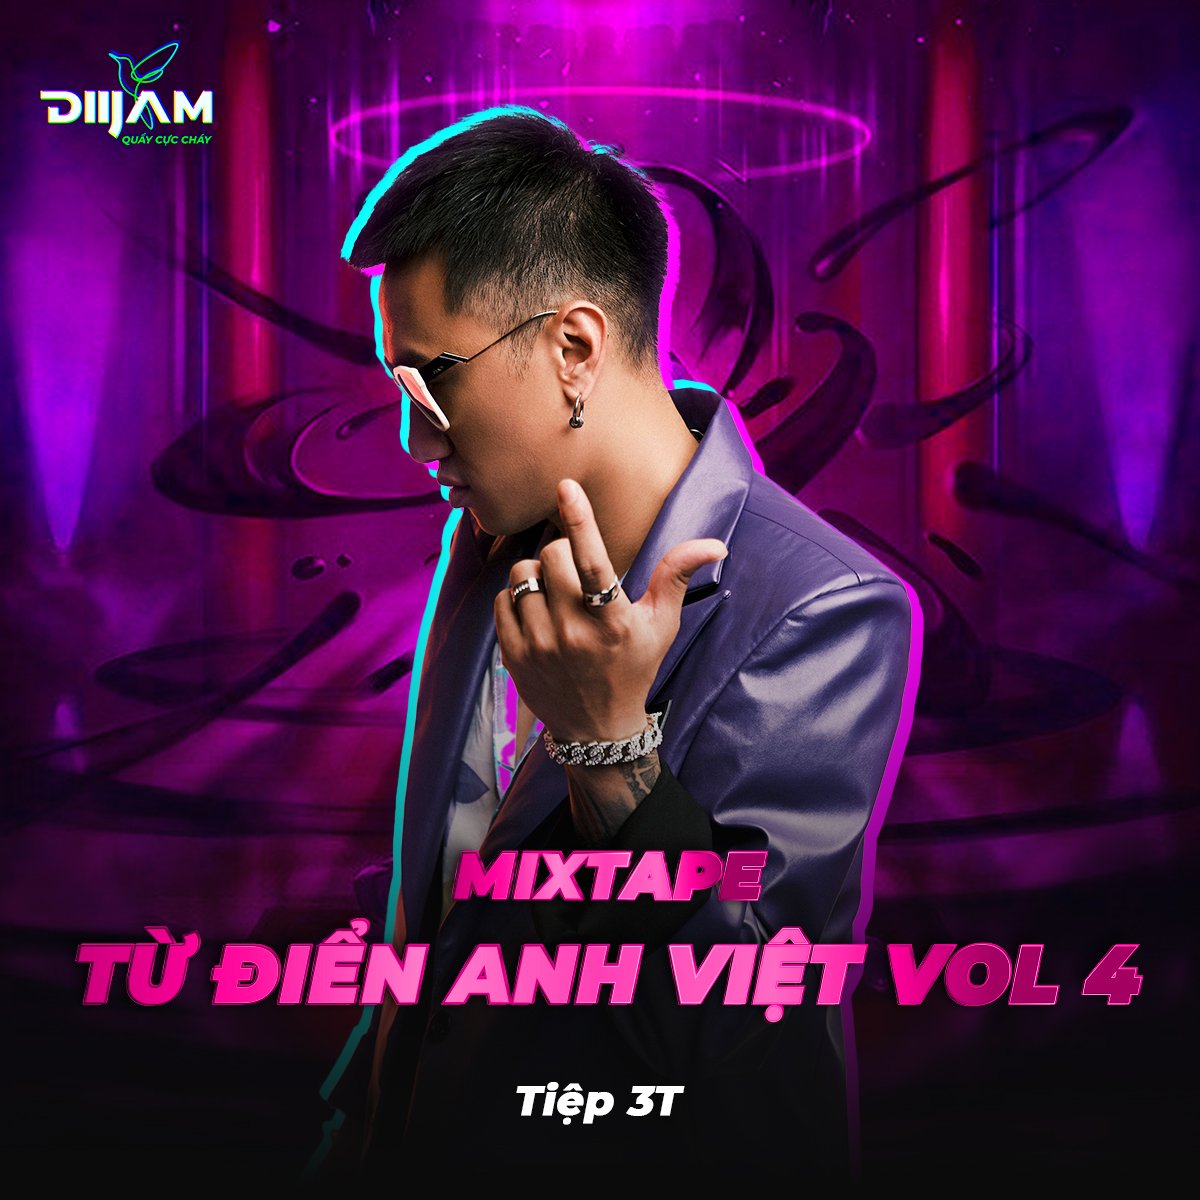 I-download Mixtape - Tu Dien Anh Viet Vol4 - Mixed By DJ Tiep 3T